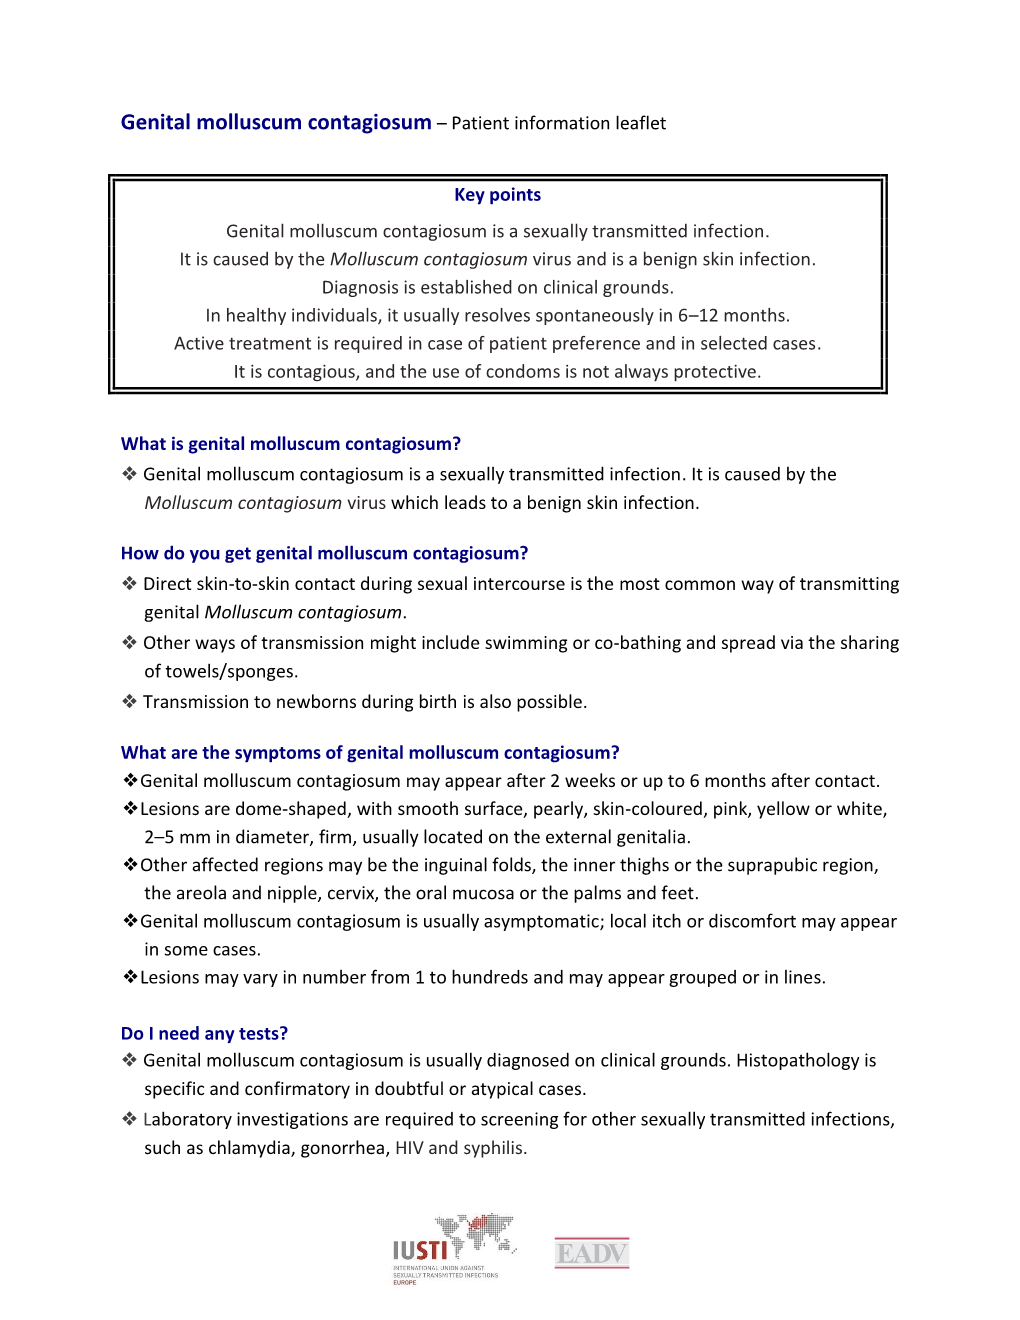 Genital Molluscum Contagiosum – Patient Information Leaflet